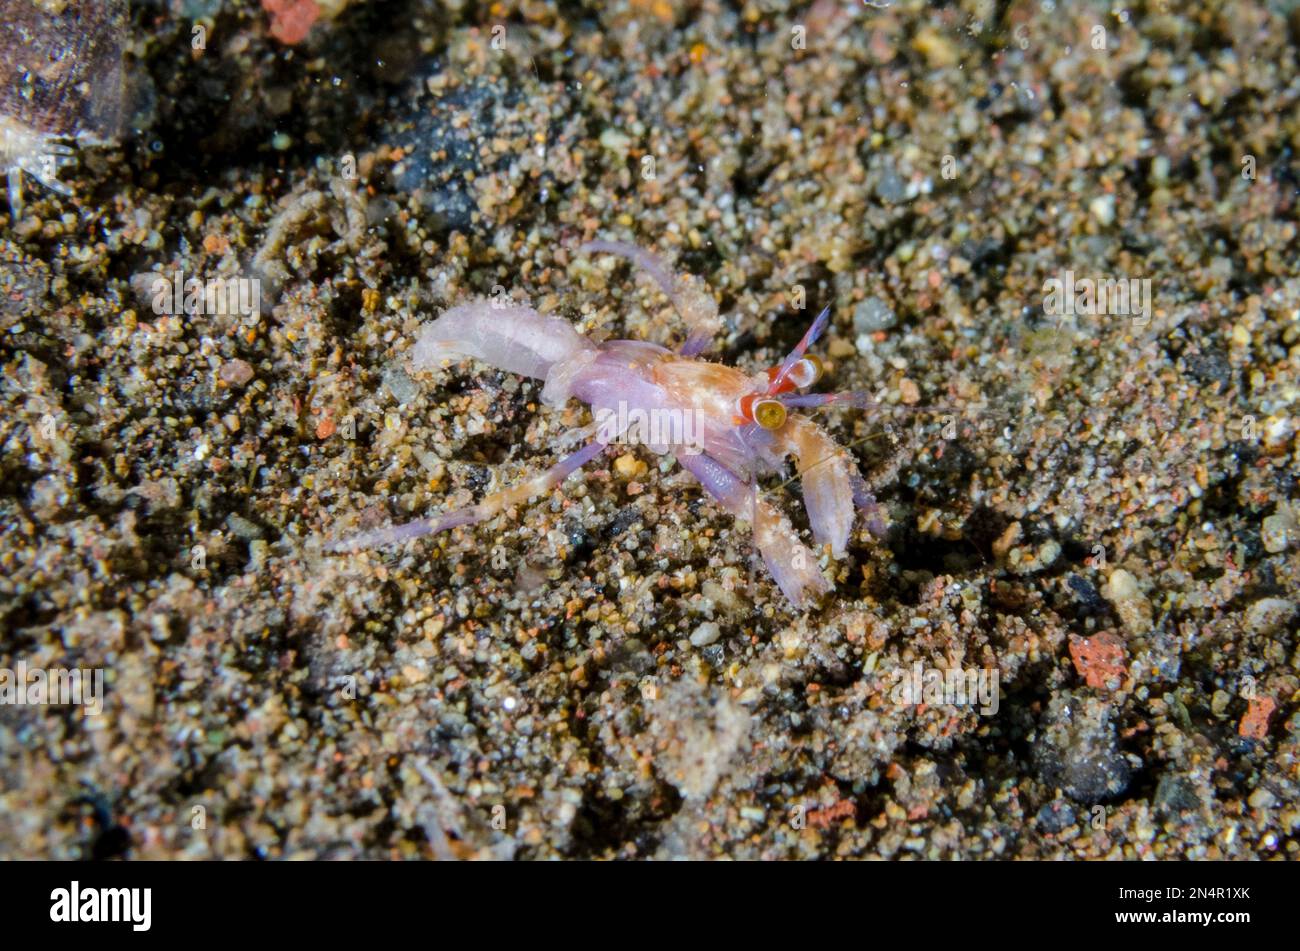 Juvenile Anemone Hermit Crab, Dardanus pedunculatus, without shell, I Love Amed dive site, Amed, Karangasem Regency, Bali, Indonesia, Indian Ocean Stock Photo